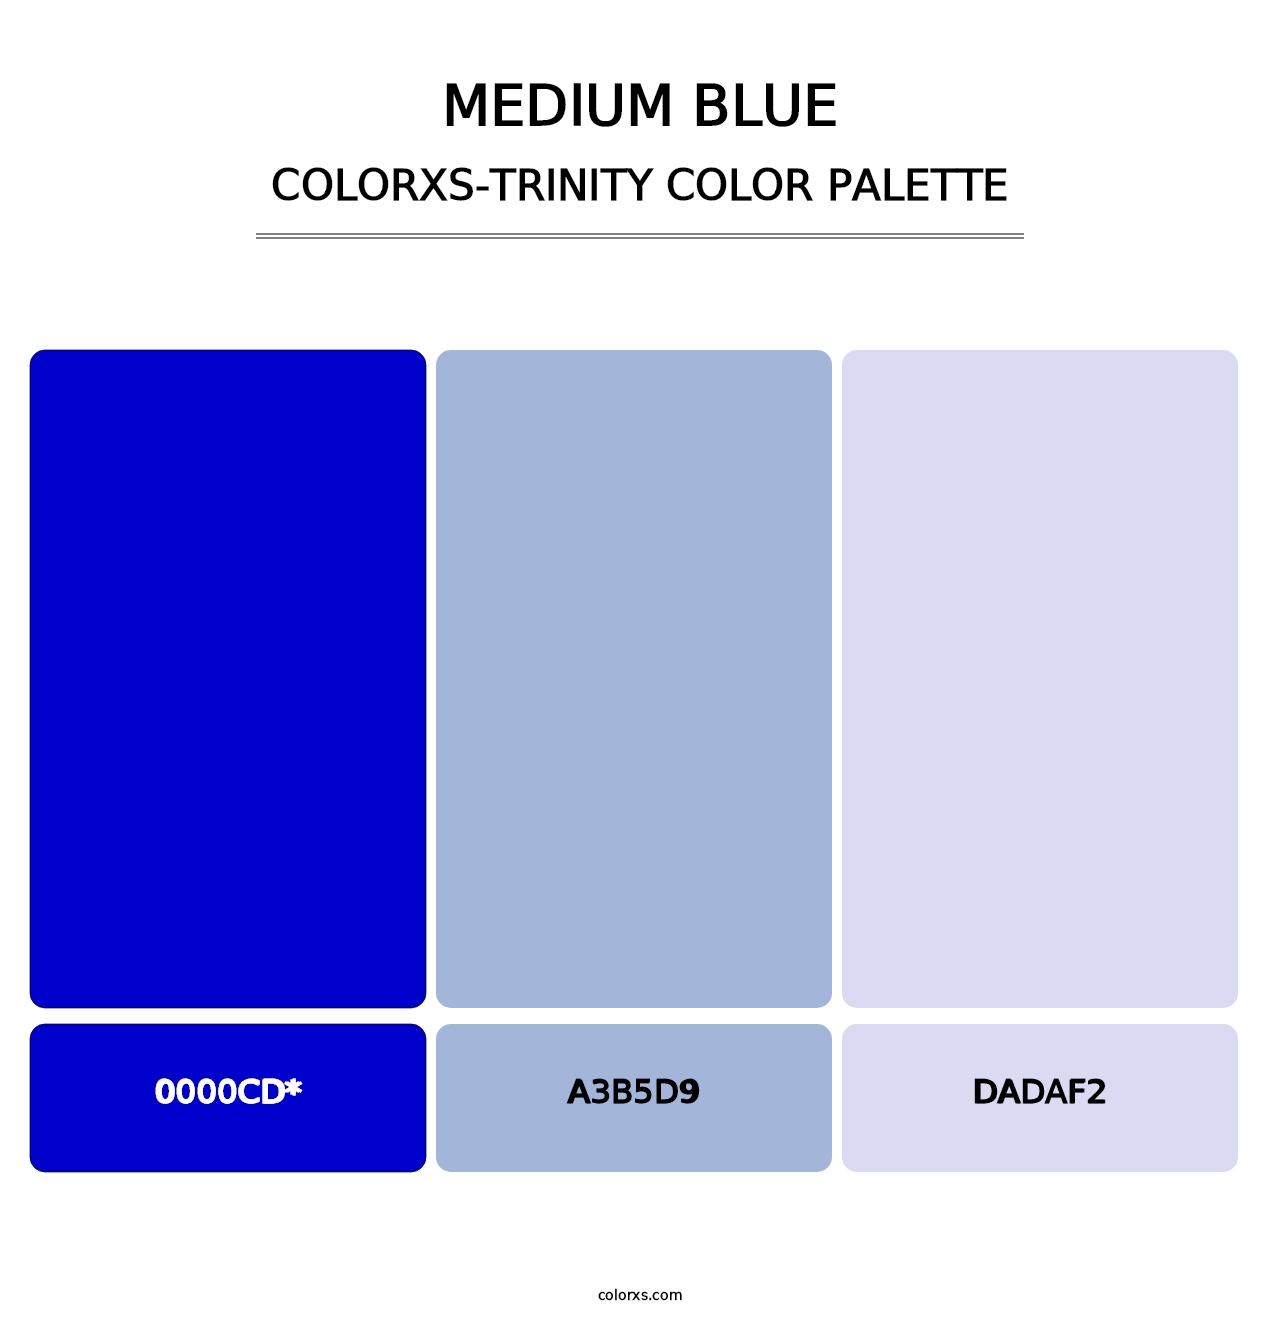 Medium Blue - Colorxs Trinity Palette